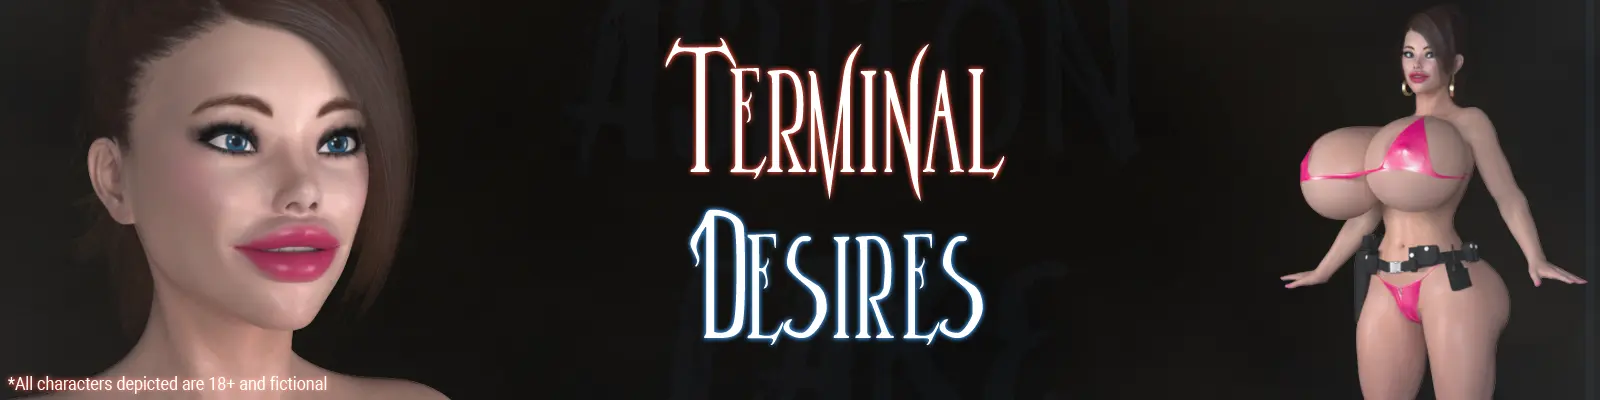 Terminal Desires [v0.08] main image